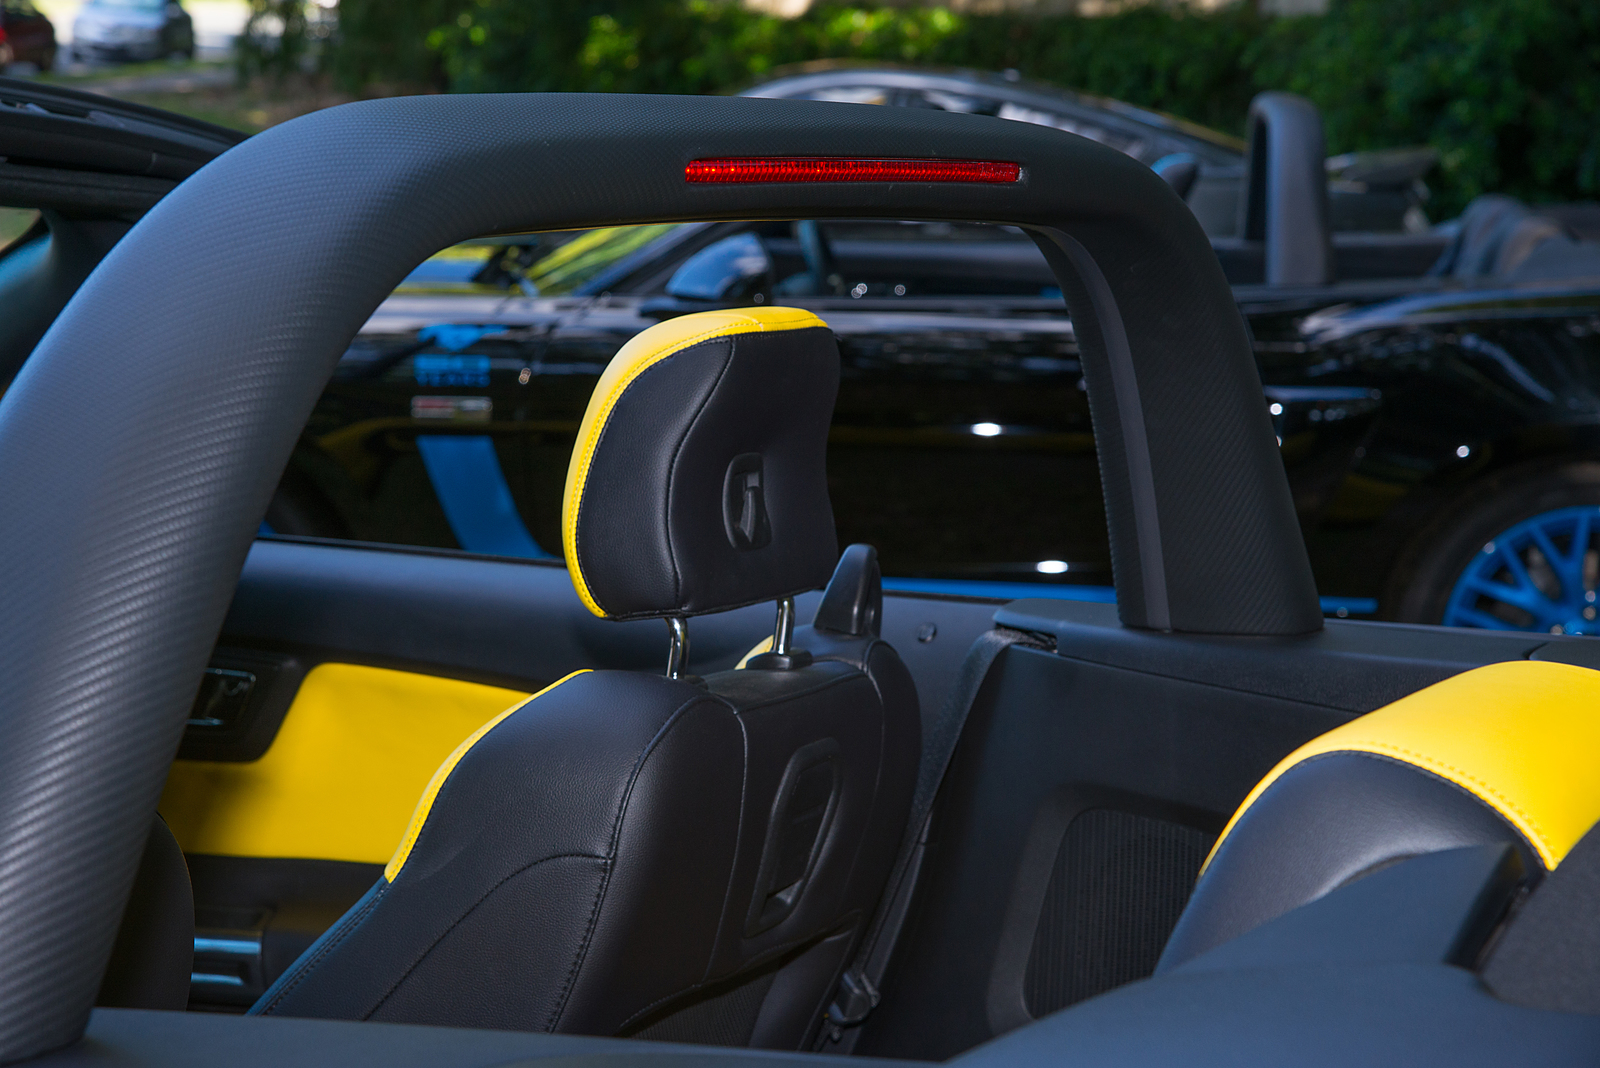 2015-22 Mustang Convertible Light Bar - Carbon Fibre   WINTER  SALE